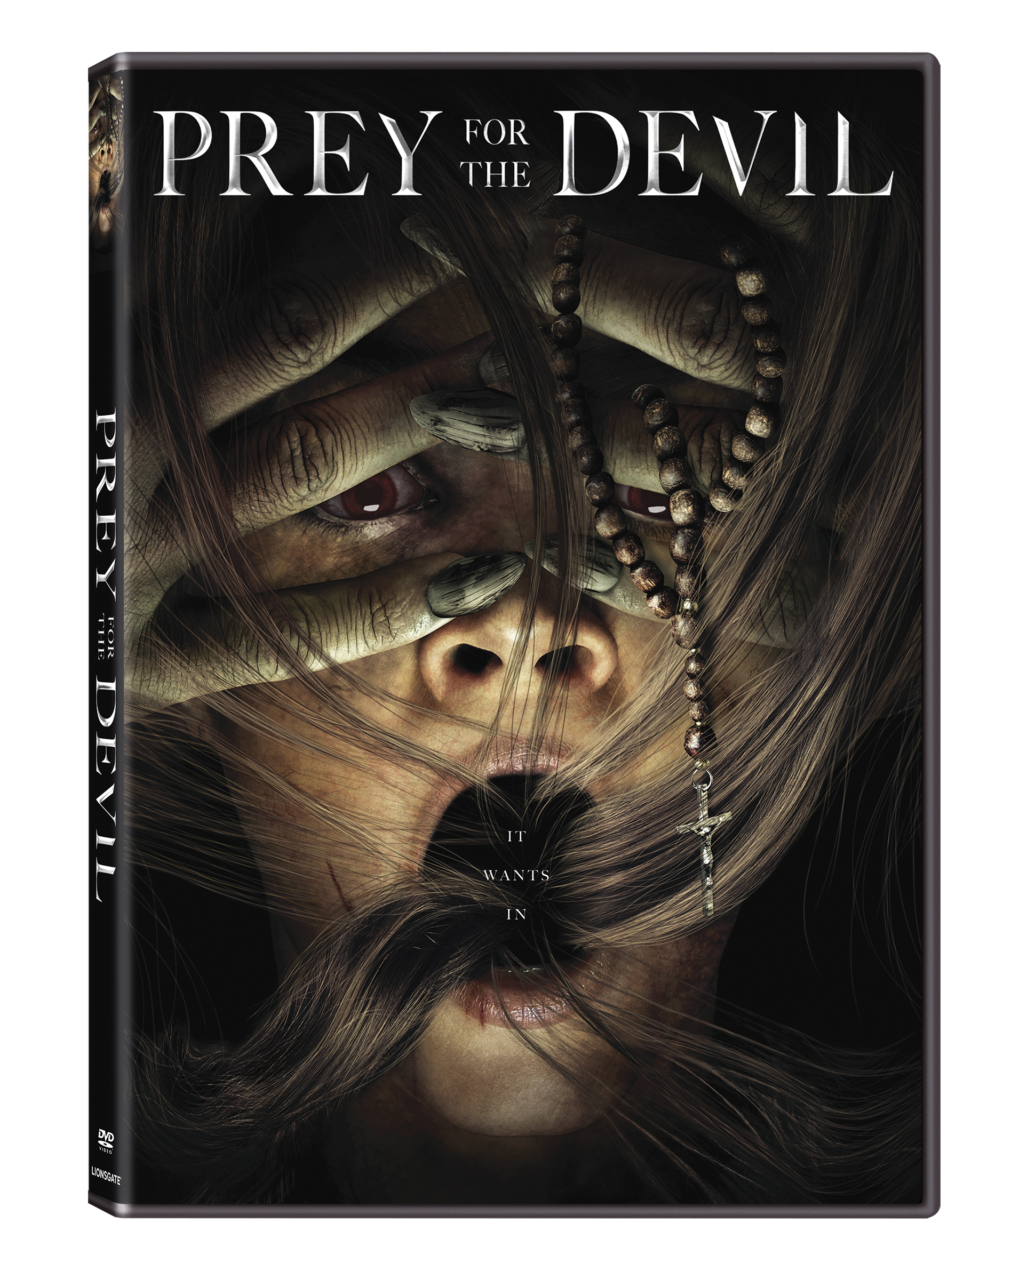 Prey For The Devil DVD cover (Lionsgate)